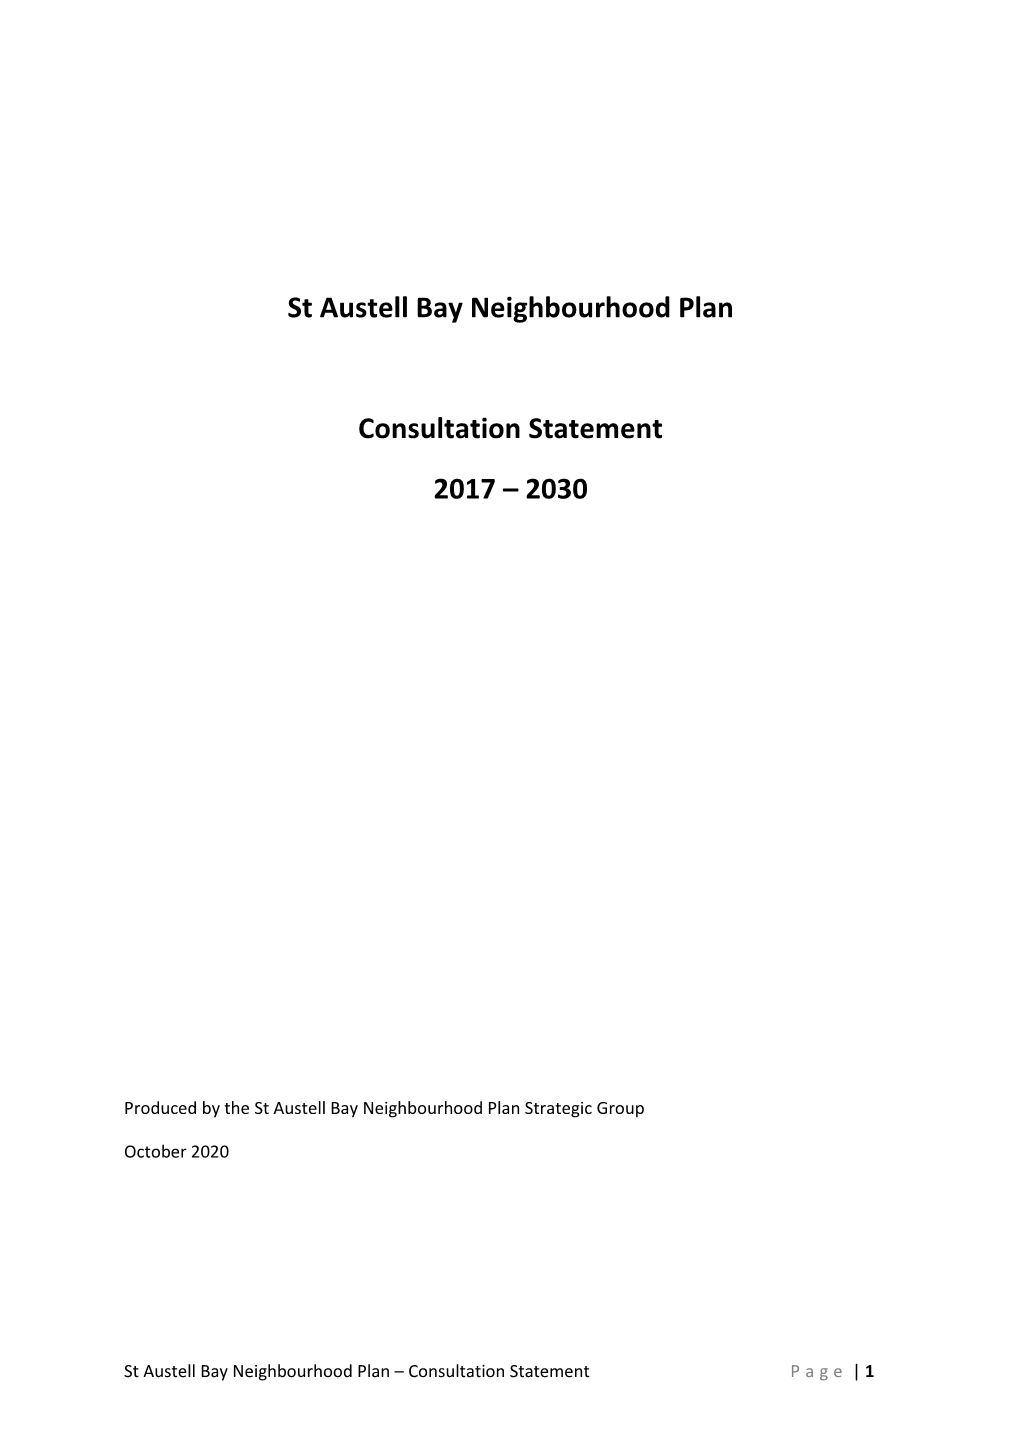 St Austell Bay Neighbourhood Plan Consultation Statement 2017 – 2030